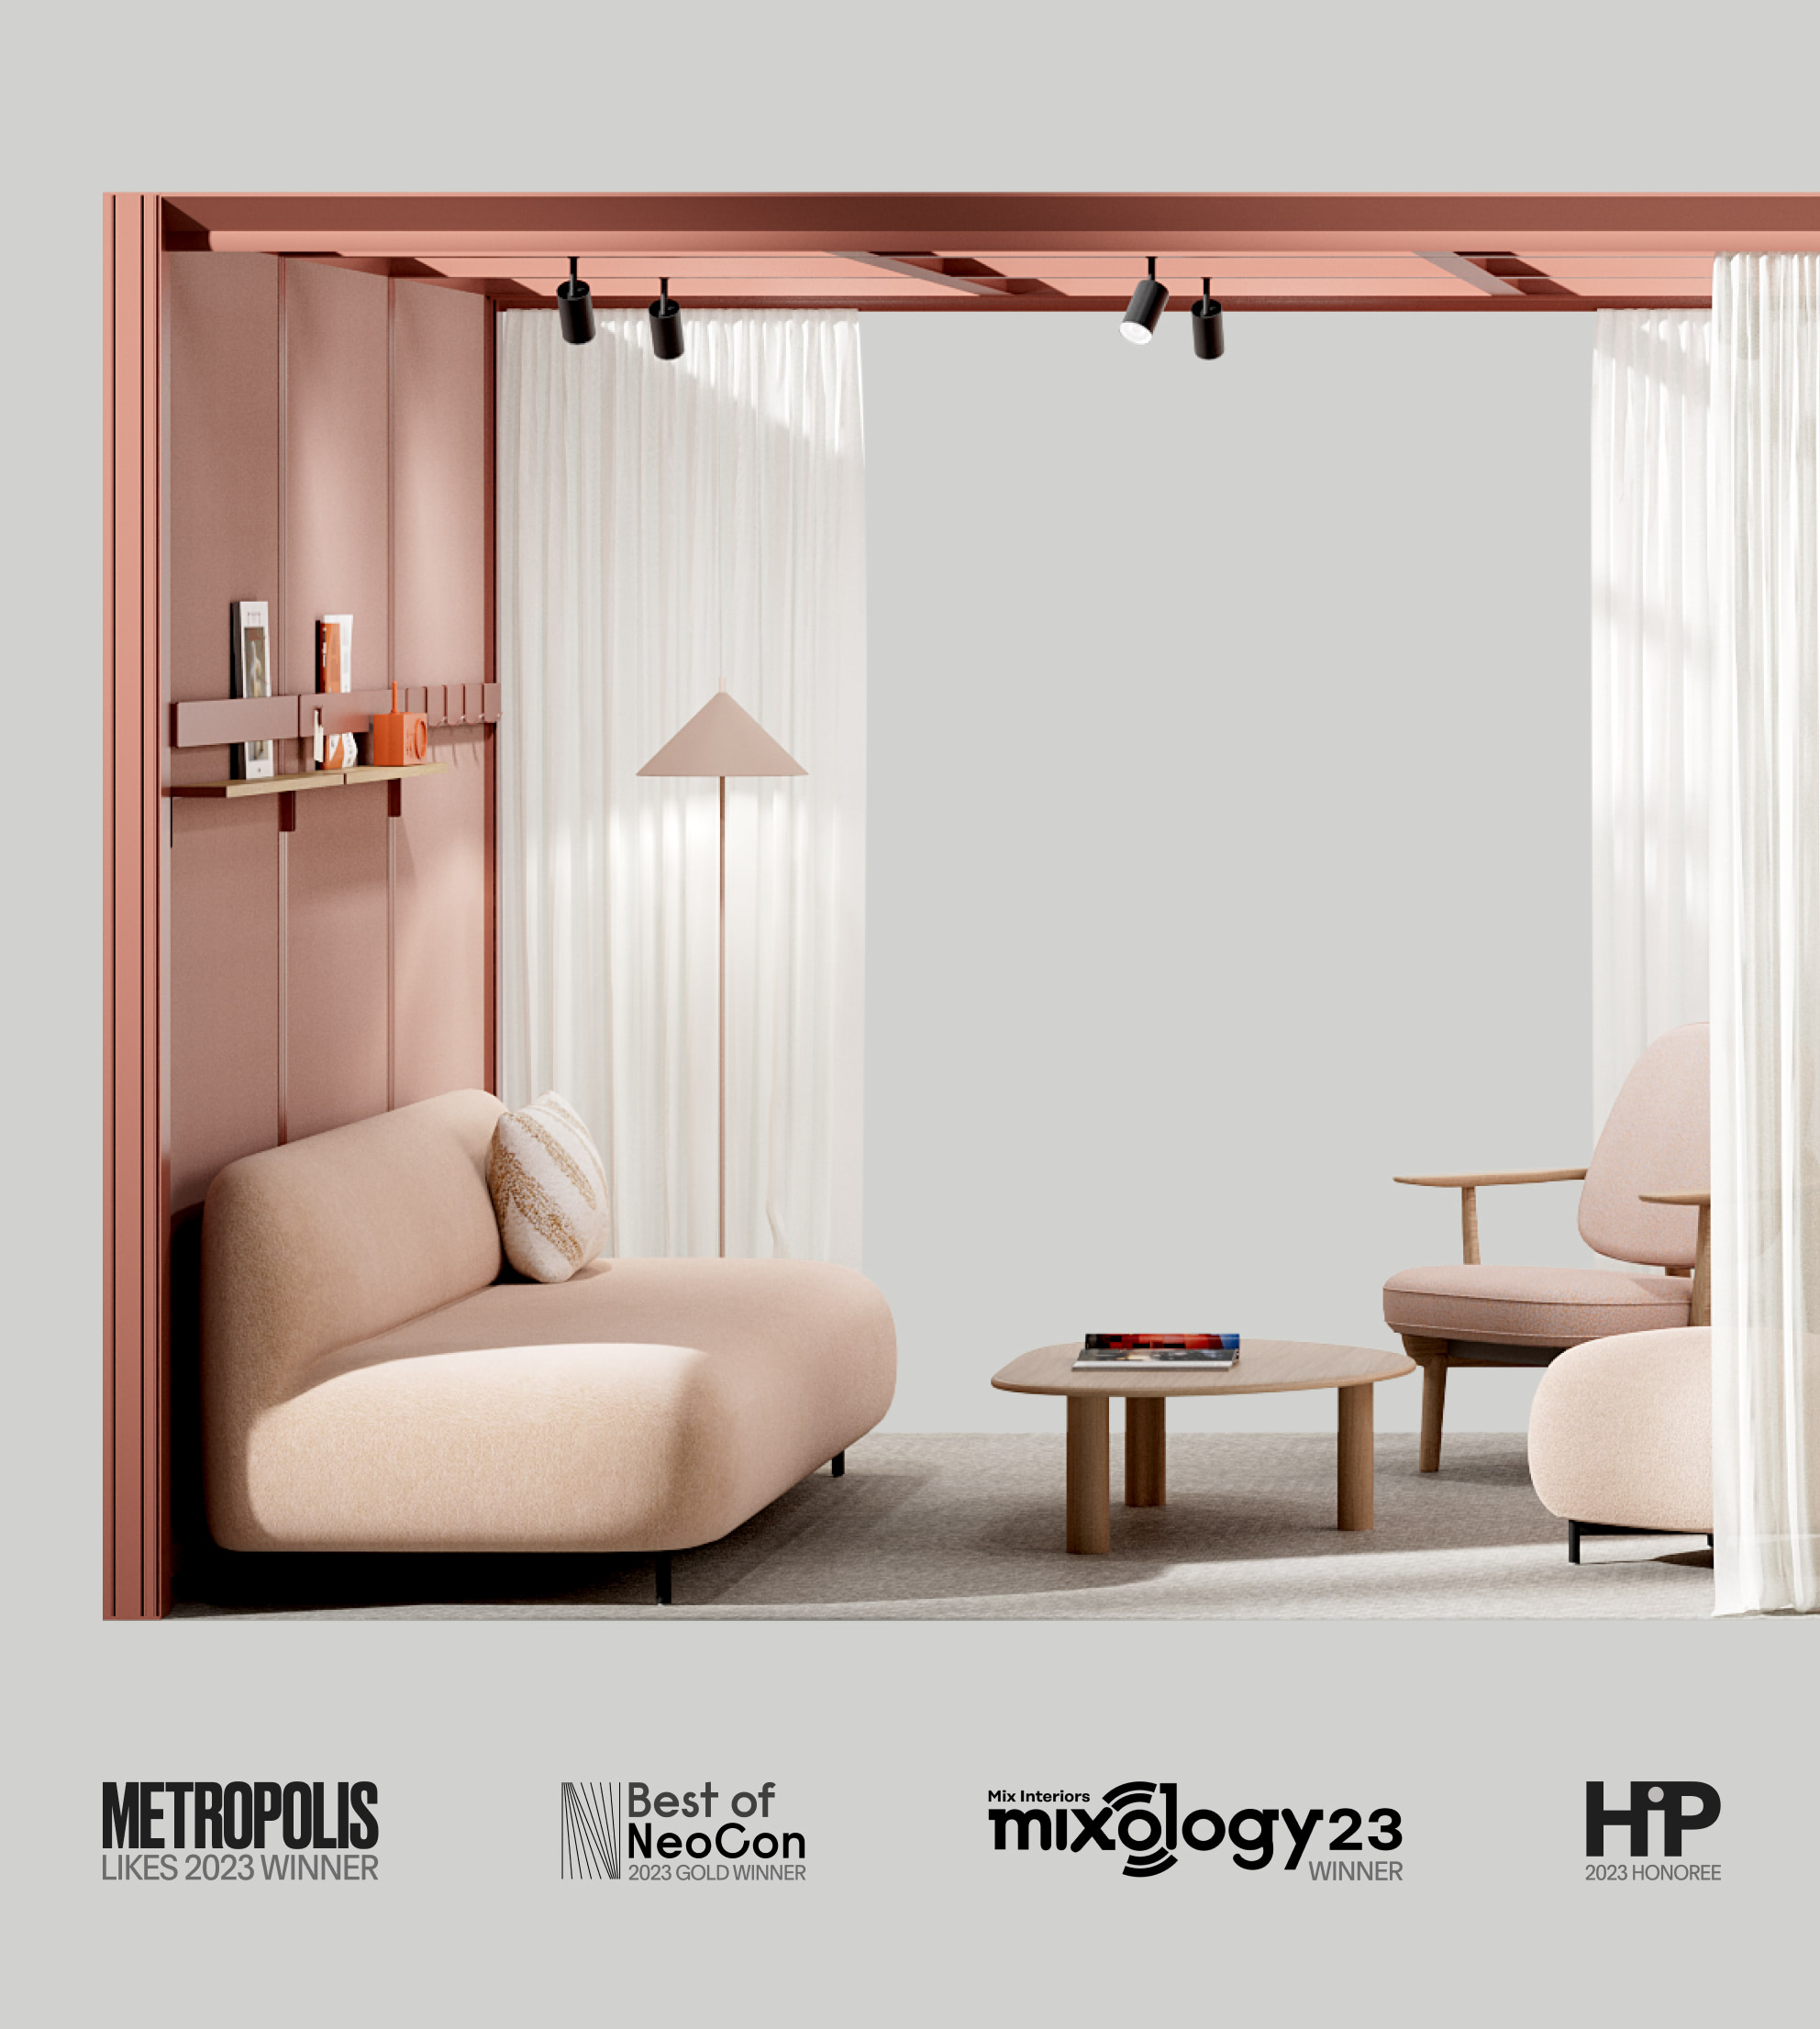 OmniRoom Awards 2023 – Metropolis Likes, Best of NeoCon Gold, Mixology Winner Loose Furniture, Interior Design Magazine HiP Honoree.